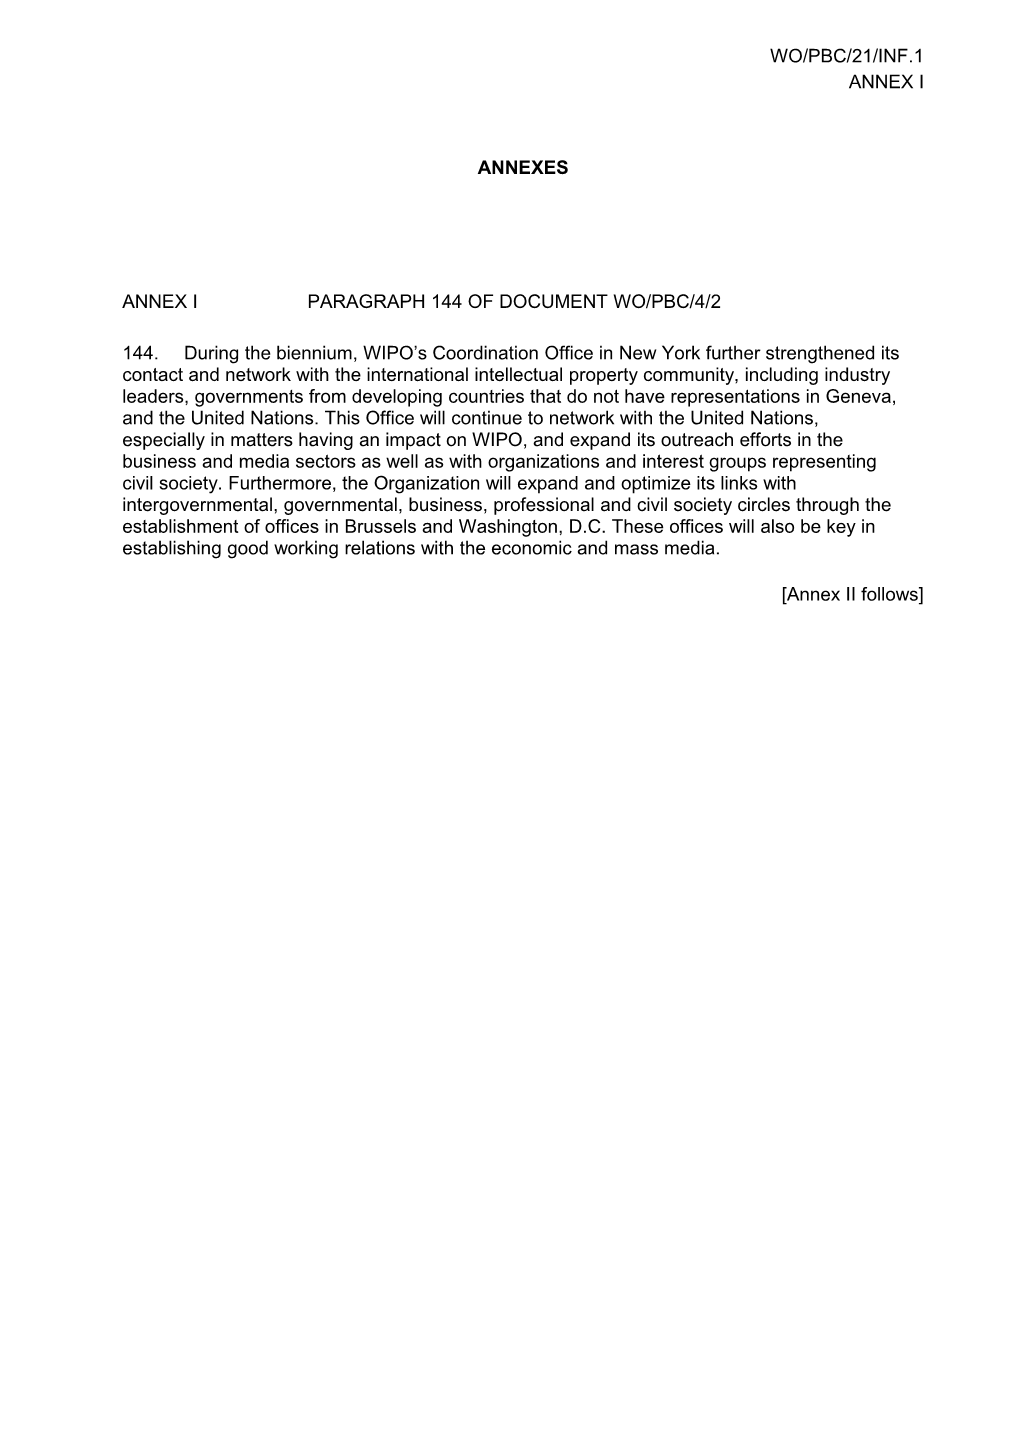 Annex I Paragraph 144 of Document WO/PBC/4/2